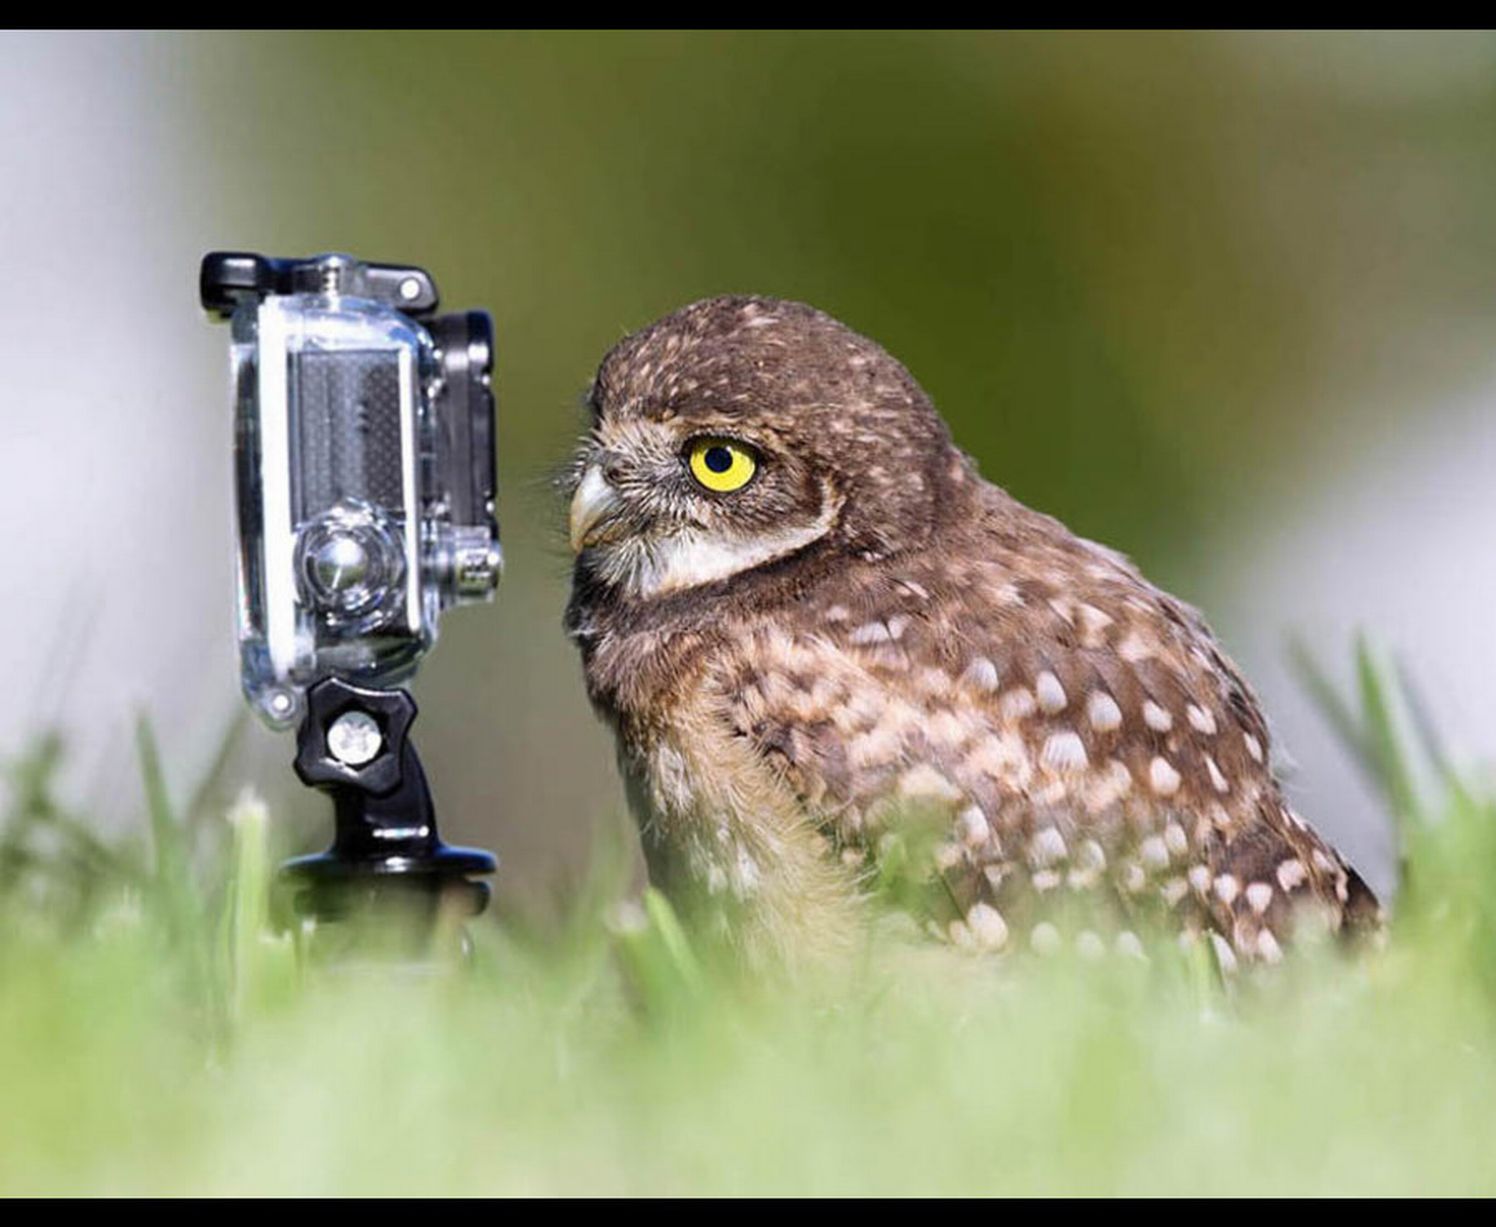 The owl selfie master